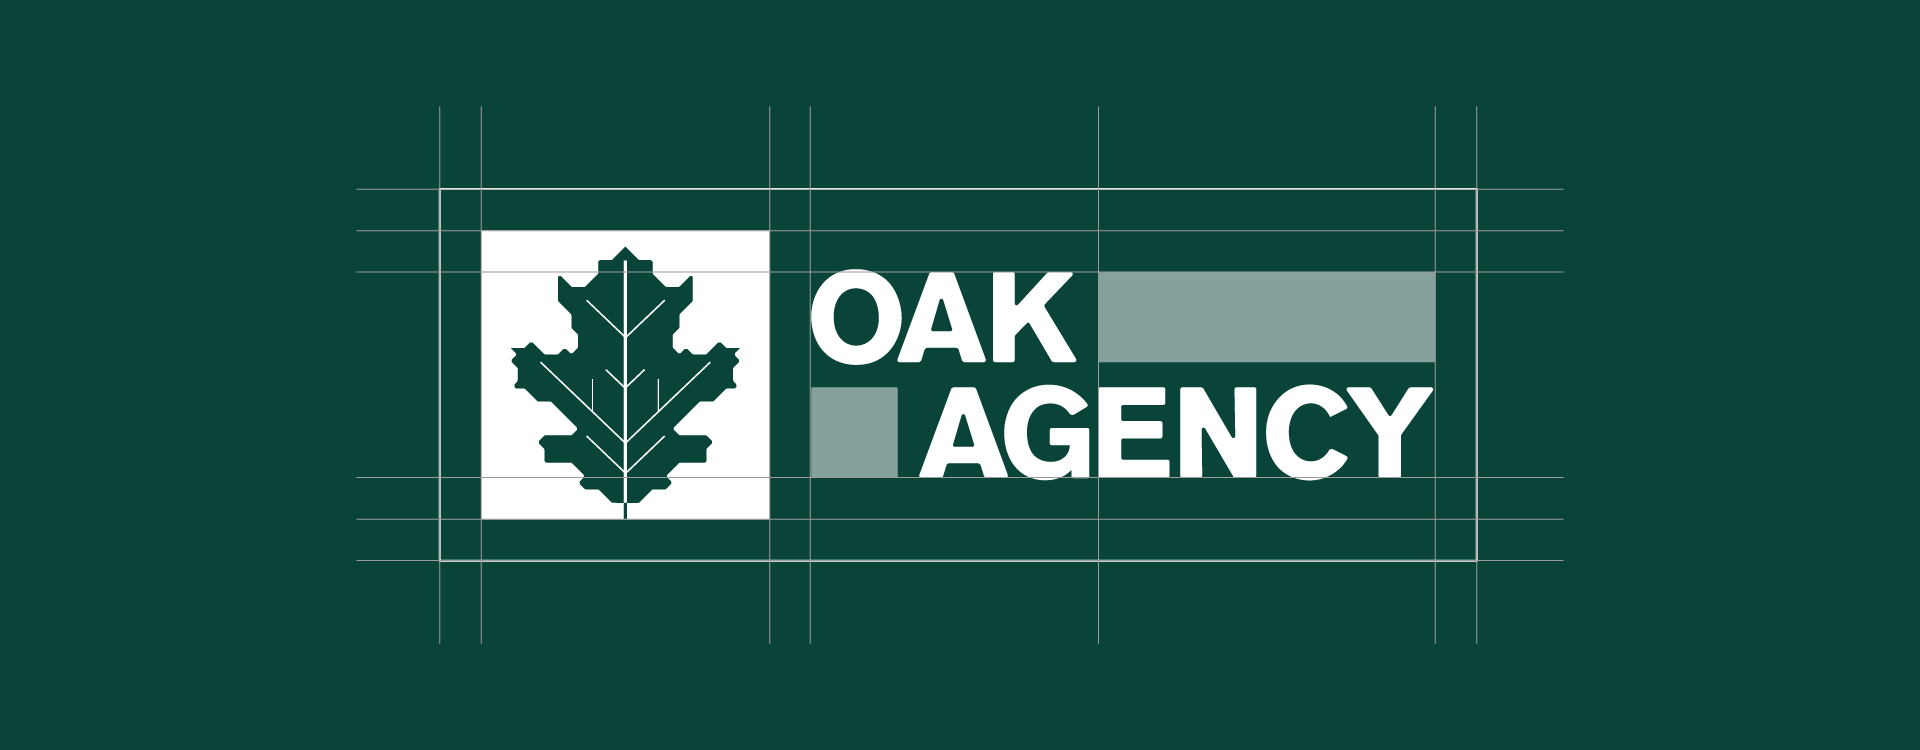 otq oak agency costruzione logo